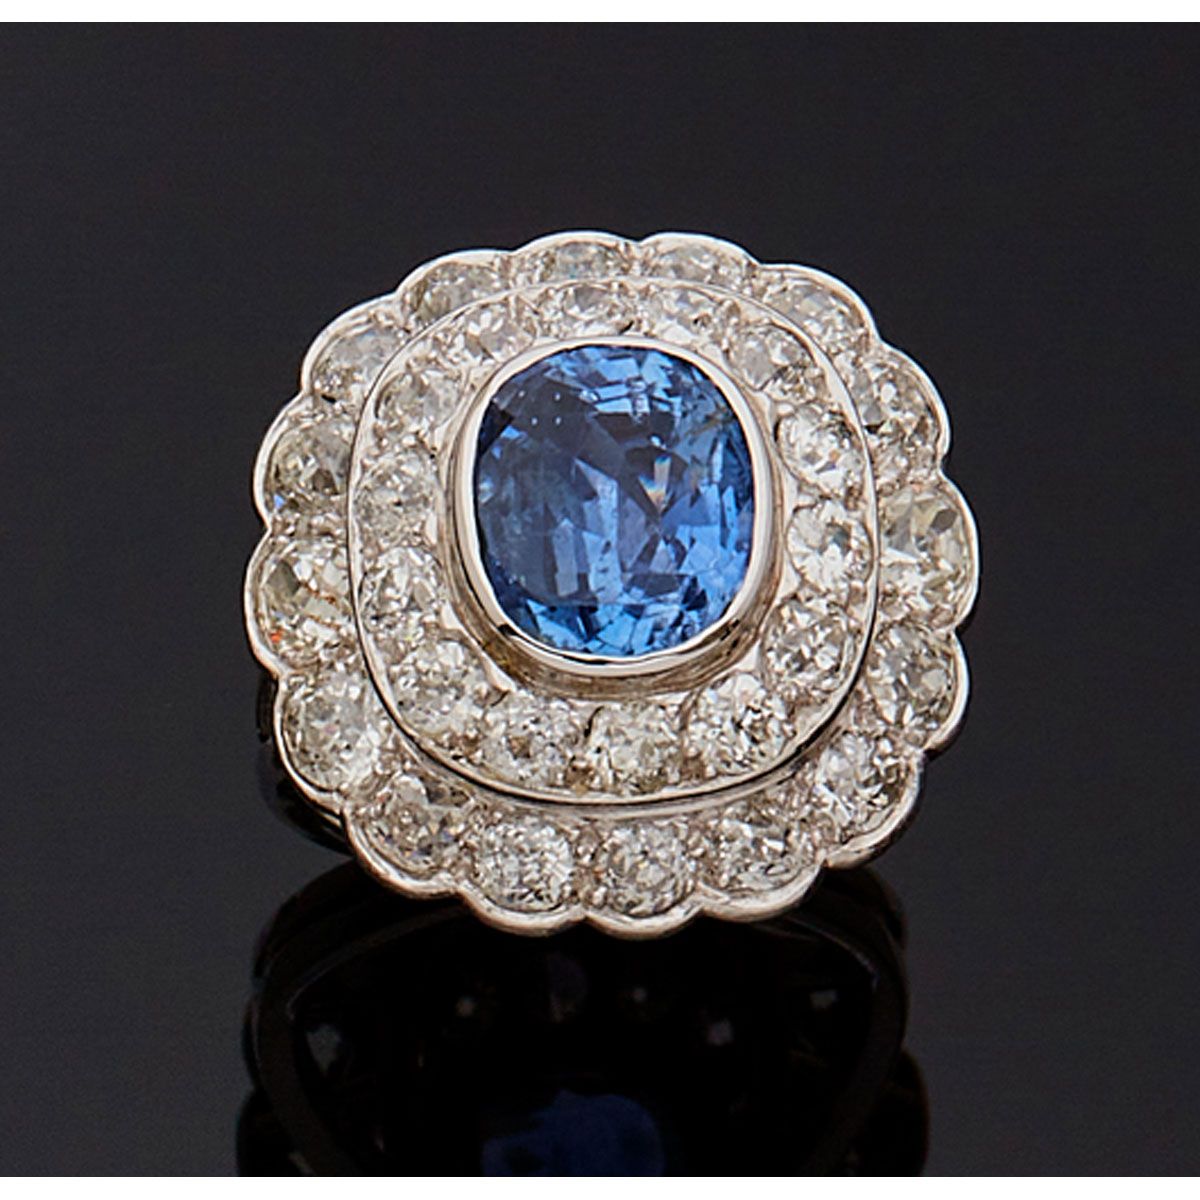 Null 18K 750毫米白金和800毫米铂金戒指，在双扇形环绕中镶嵌枕形蓝宝石，并镶嵌老式切割钻石。

LFG证书编号336420，2018年4月20日

&hellip;